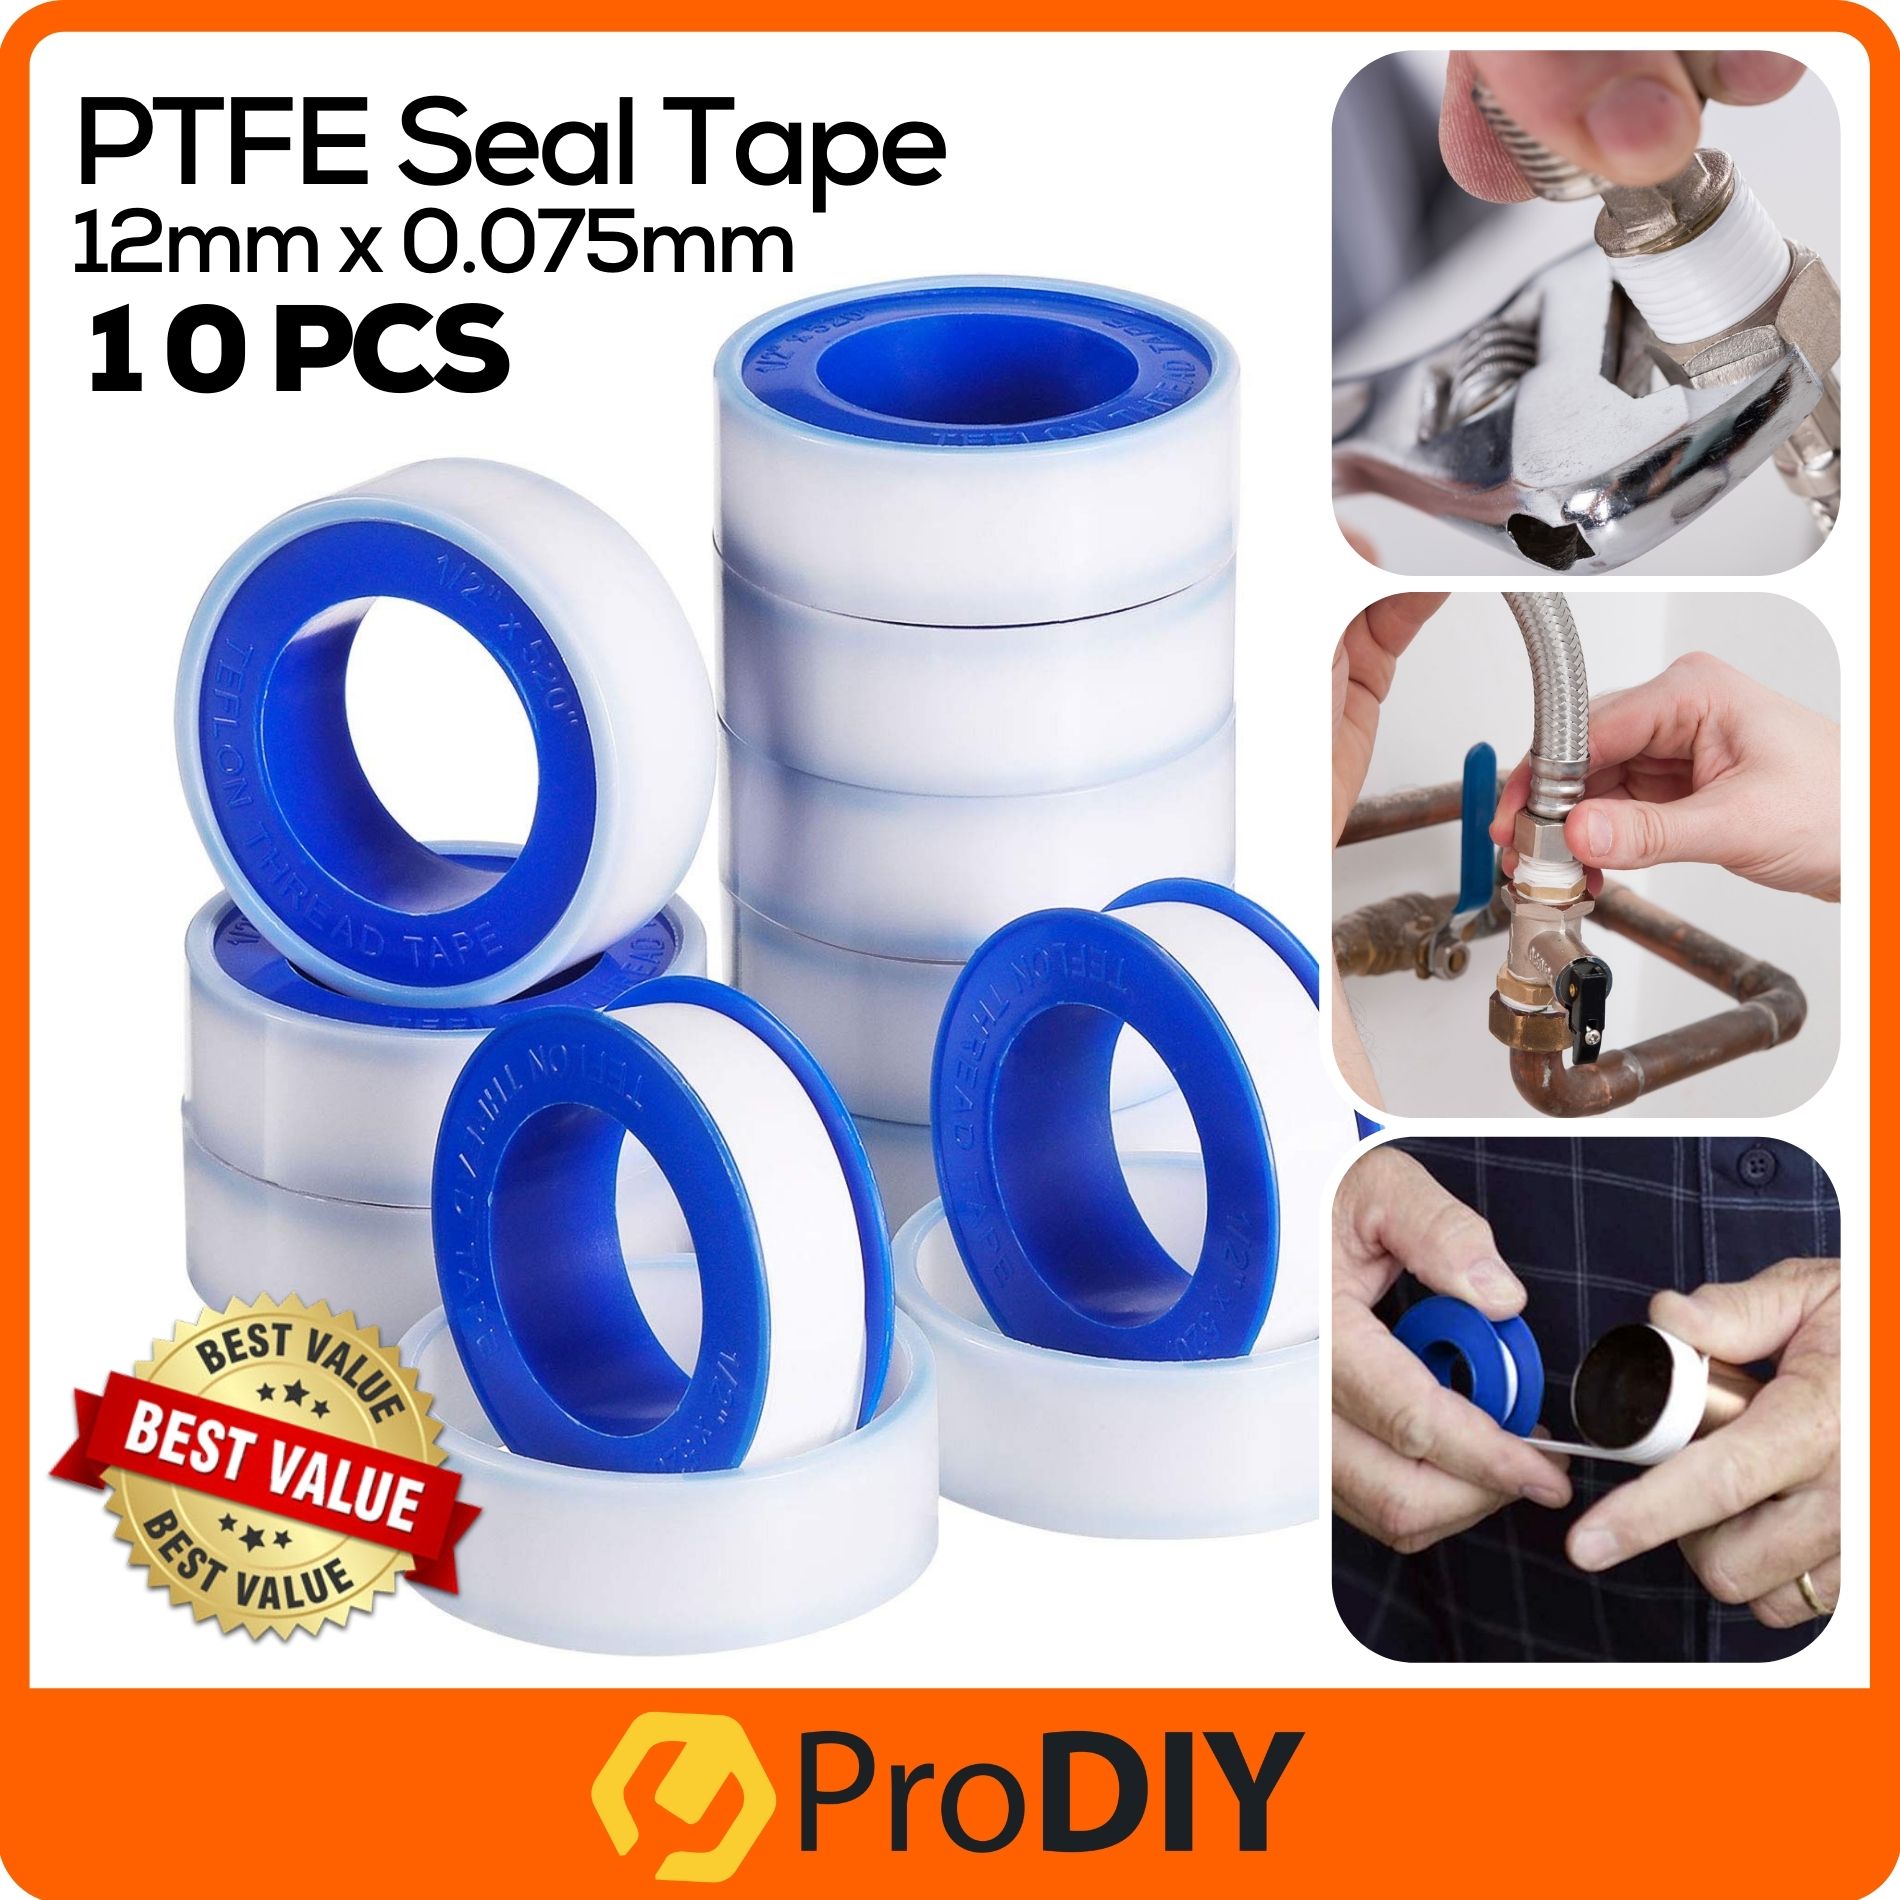 10PCS 12mm x 0.075mm PTFE Seal Tape Hose Tape Pipe Tape Plumbing Pipe Repair Thread Sealing Tape ( 12mm x 0.075mm )